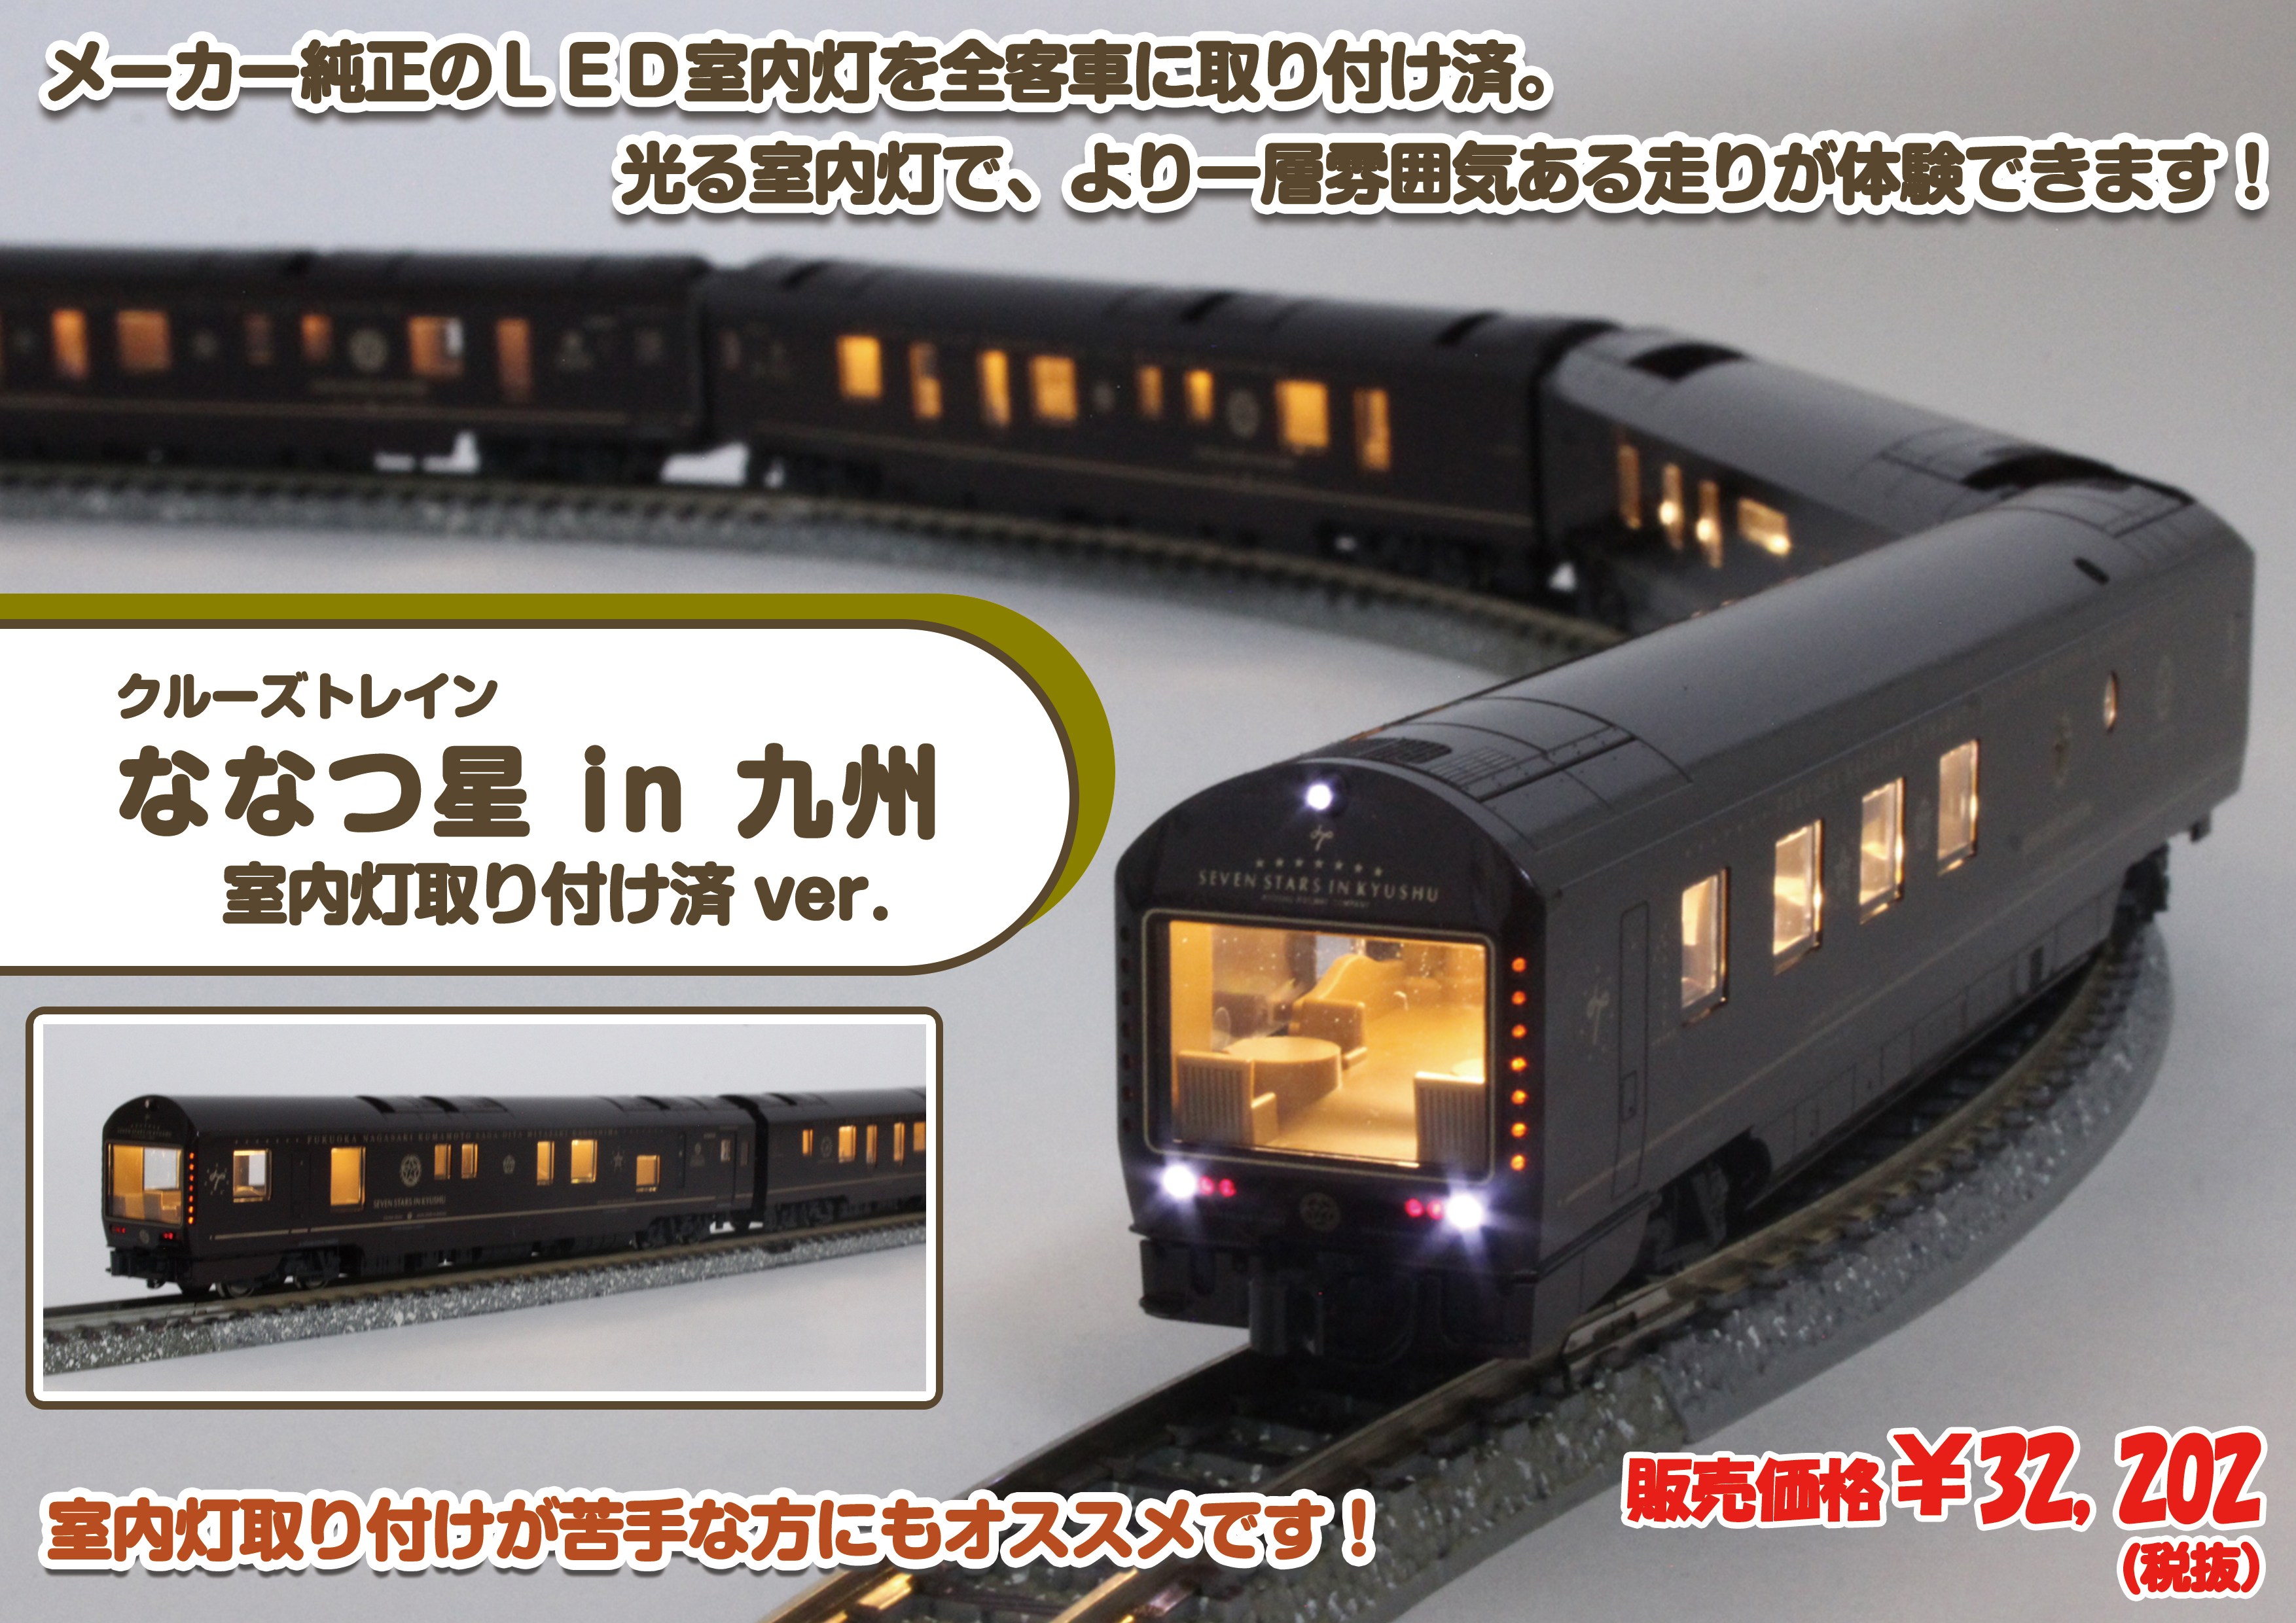 KATO Nゲージ クルーズトレイン「ななつ星in九州」 8両セット 特別企画品 10-1519 鉄道模型 客車